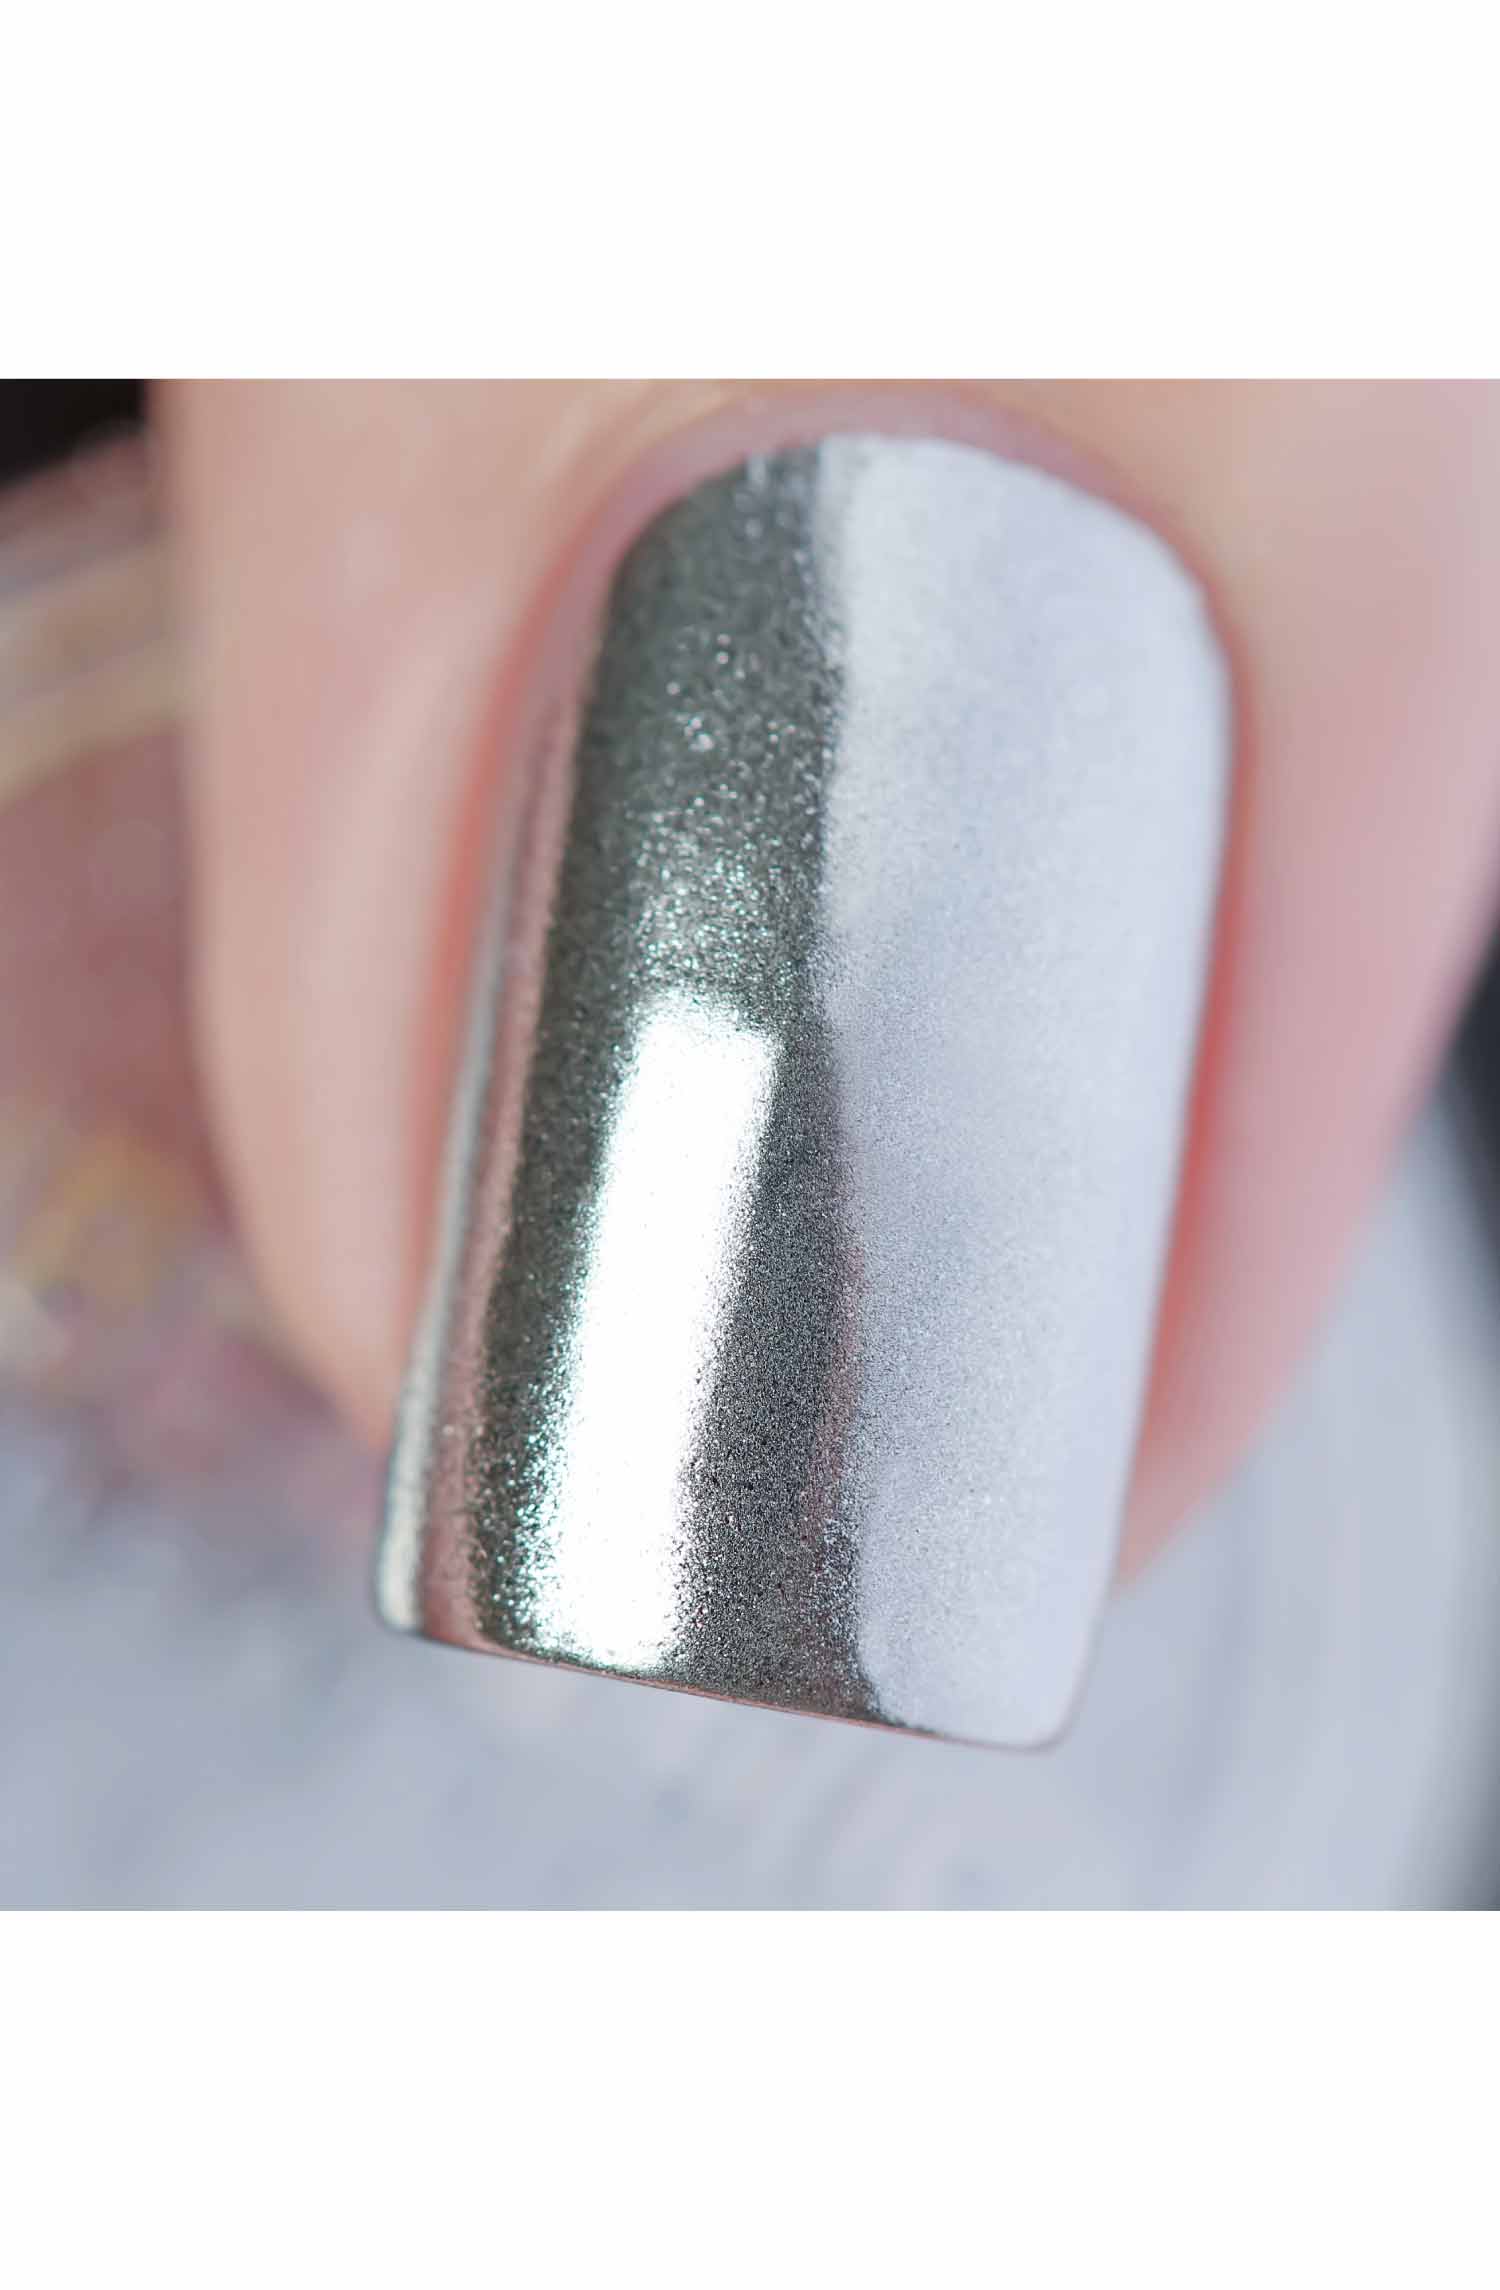 FZANEST Gel Nail Polish Glitter UV Gel Soak Off Nail Gel Polish Sparkle  Color Manicure Pedicure (Diamond Silver) - Walmart.com